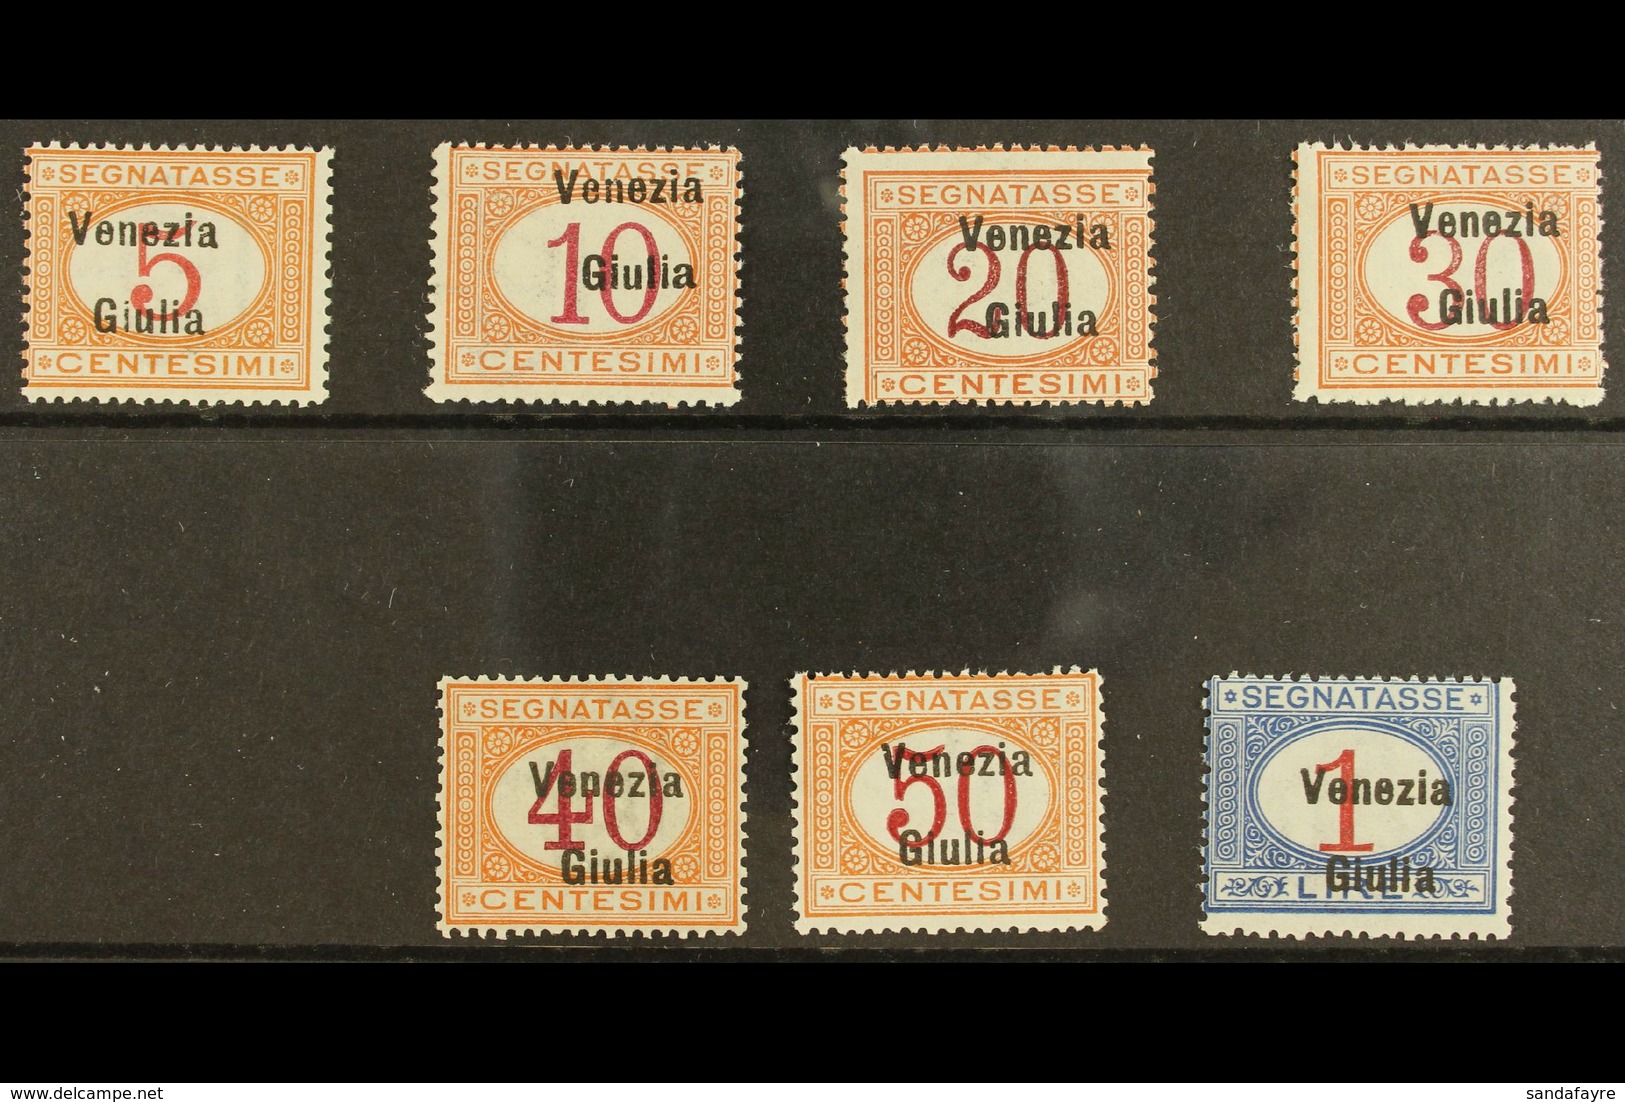 VENEZIA GIULIA POSTAGE DUES 1918 Overprint Set Complete, Sass S4, Very Fine Never Hinged Mint. Cat €2500 (£1900) Rare Se - Non Classés